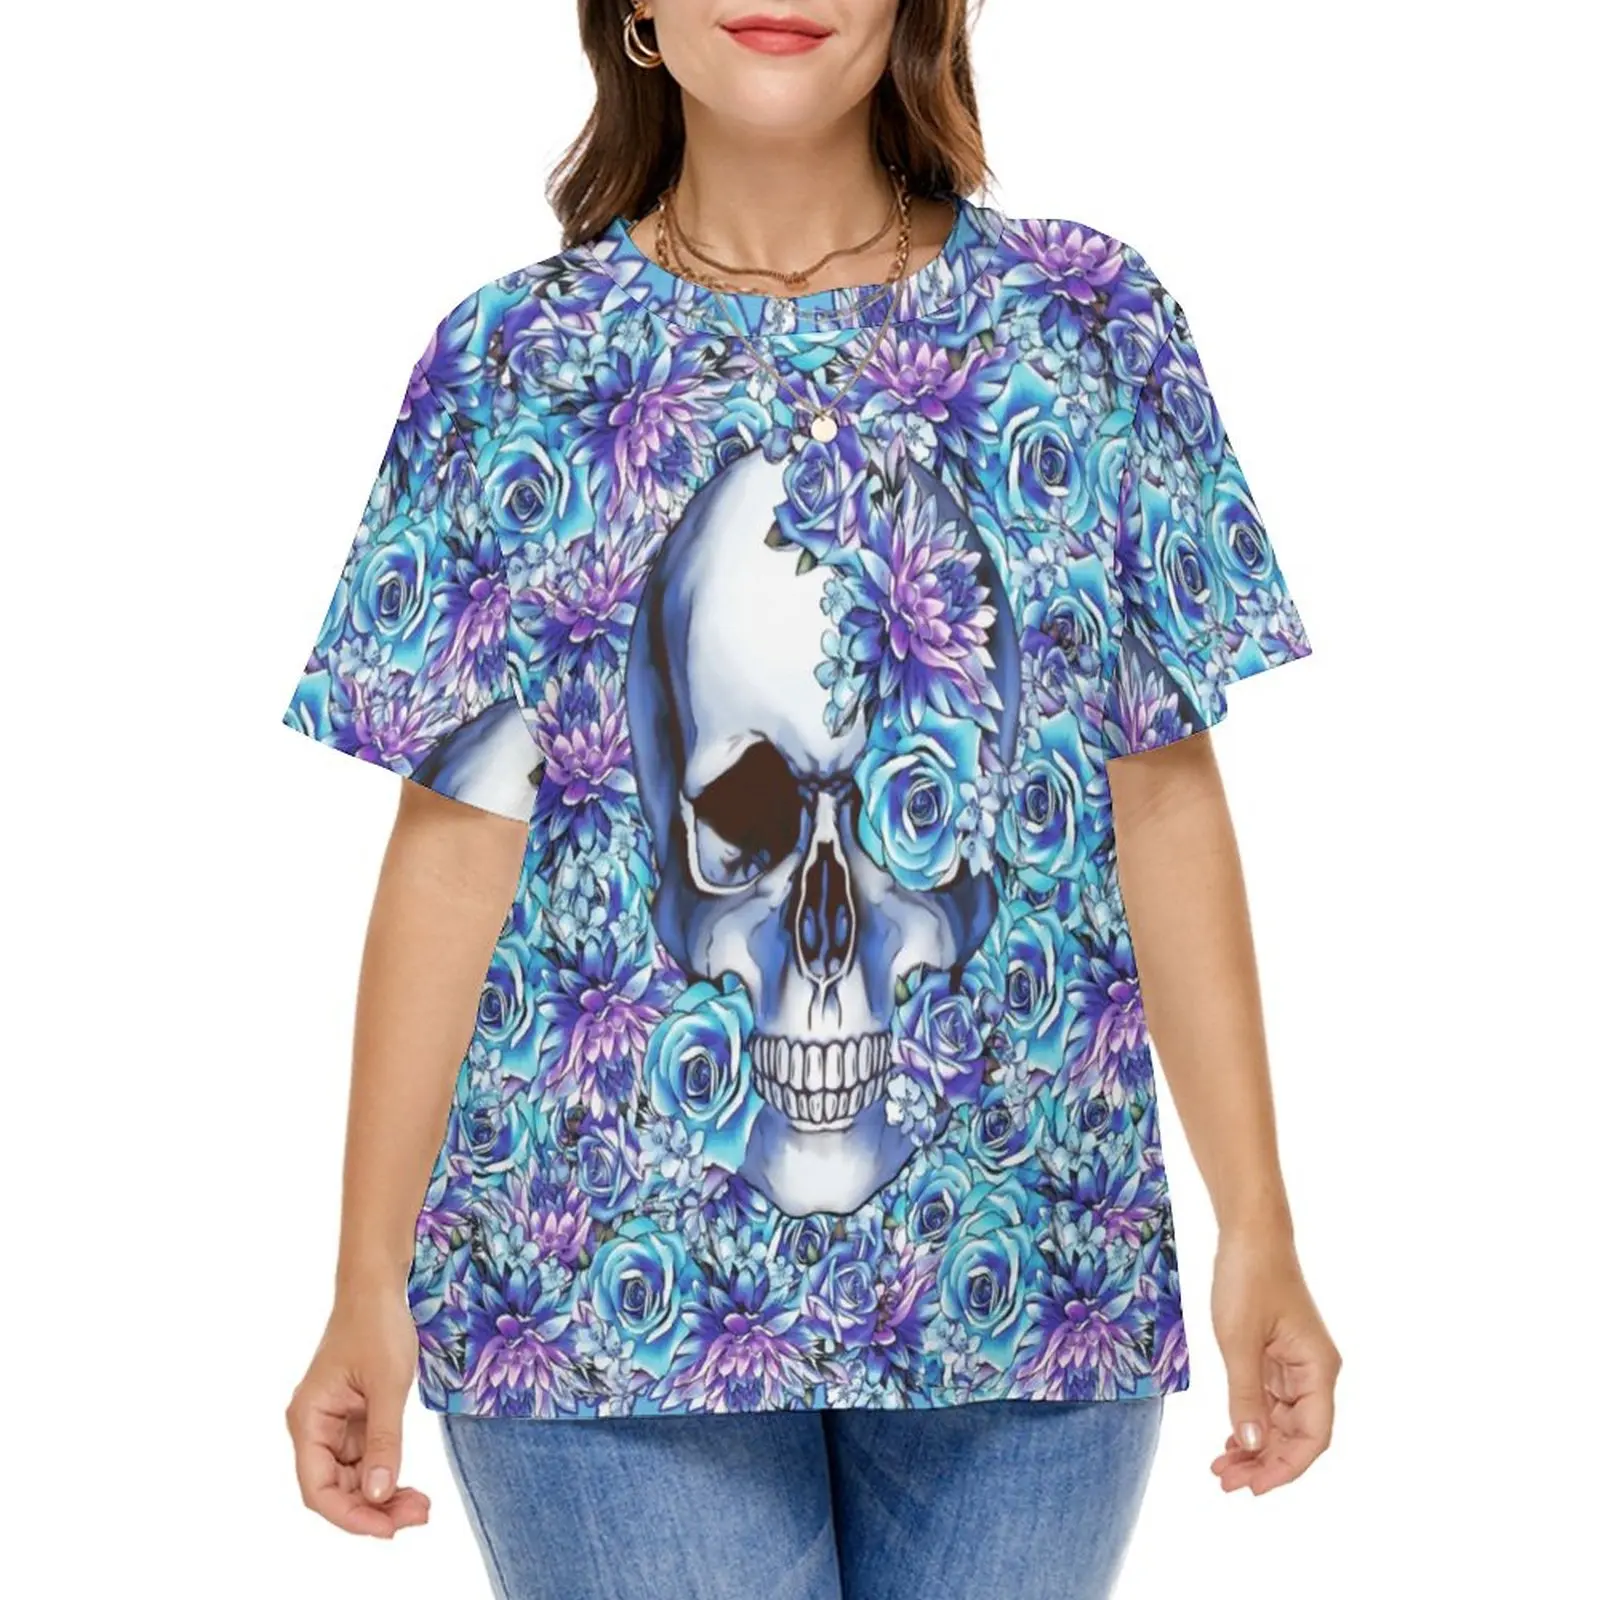 Skeleton Print T-Shirt Sugar Skull Blue Floral Modern T-Shirts Short Sleeves Street Fashion Tees Women Clothes Plus Size 4XL 5XL